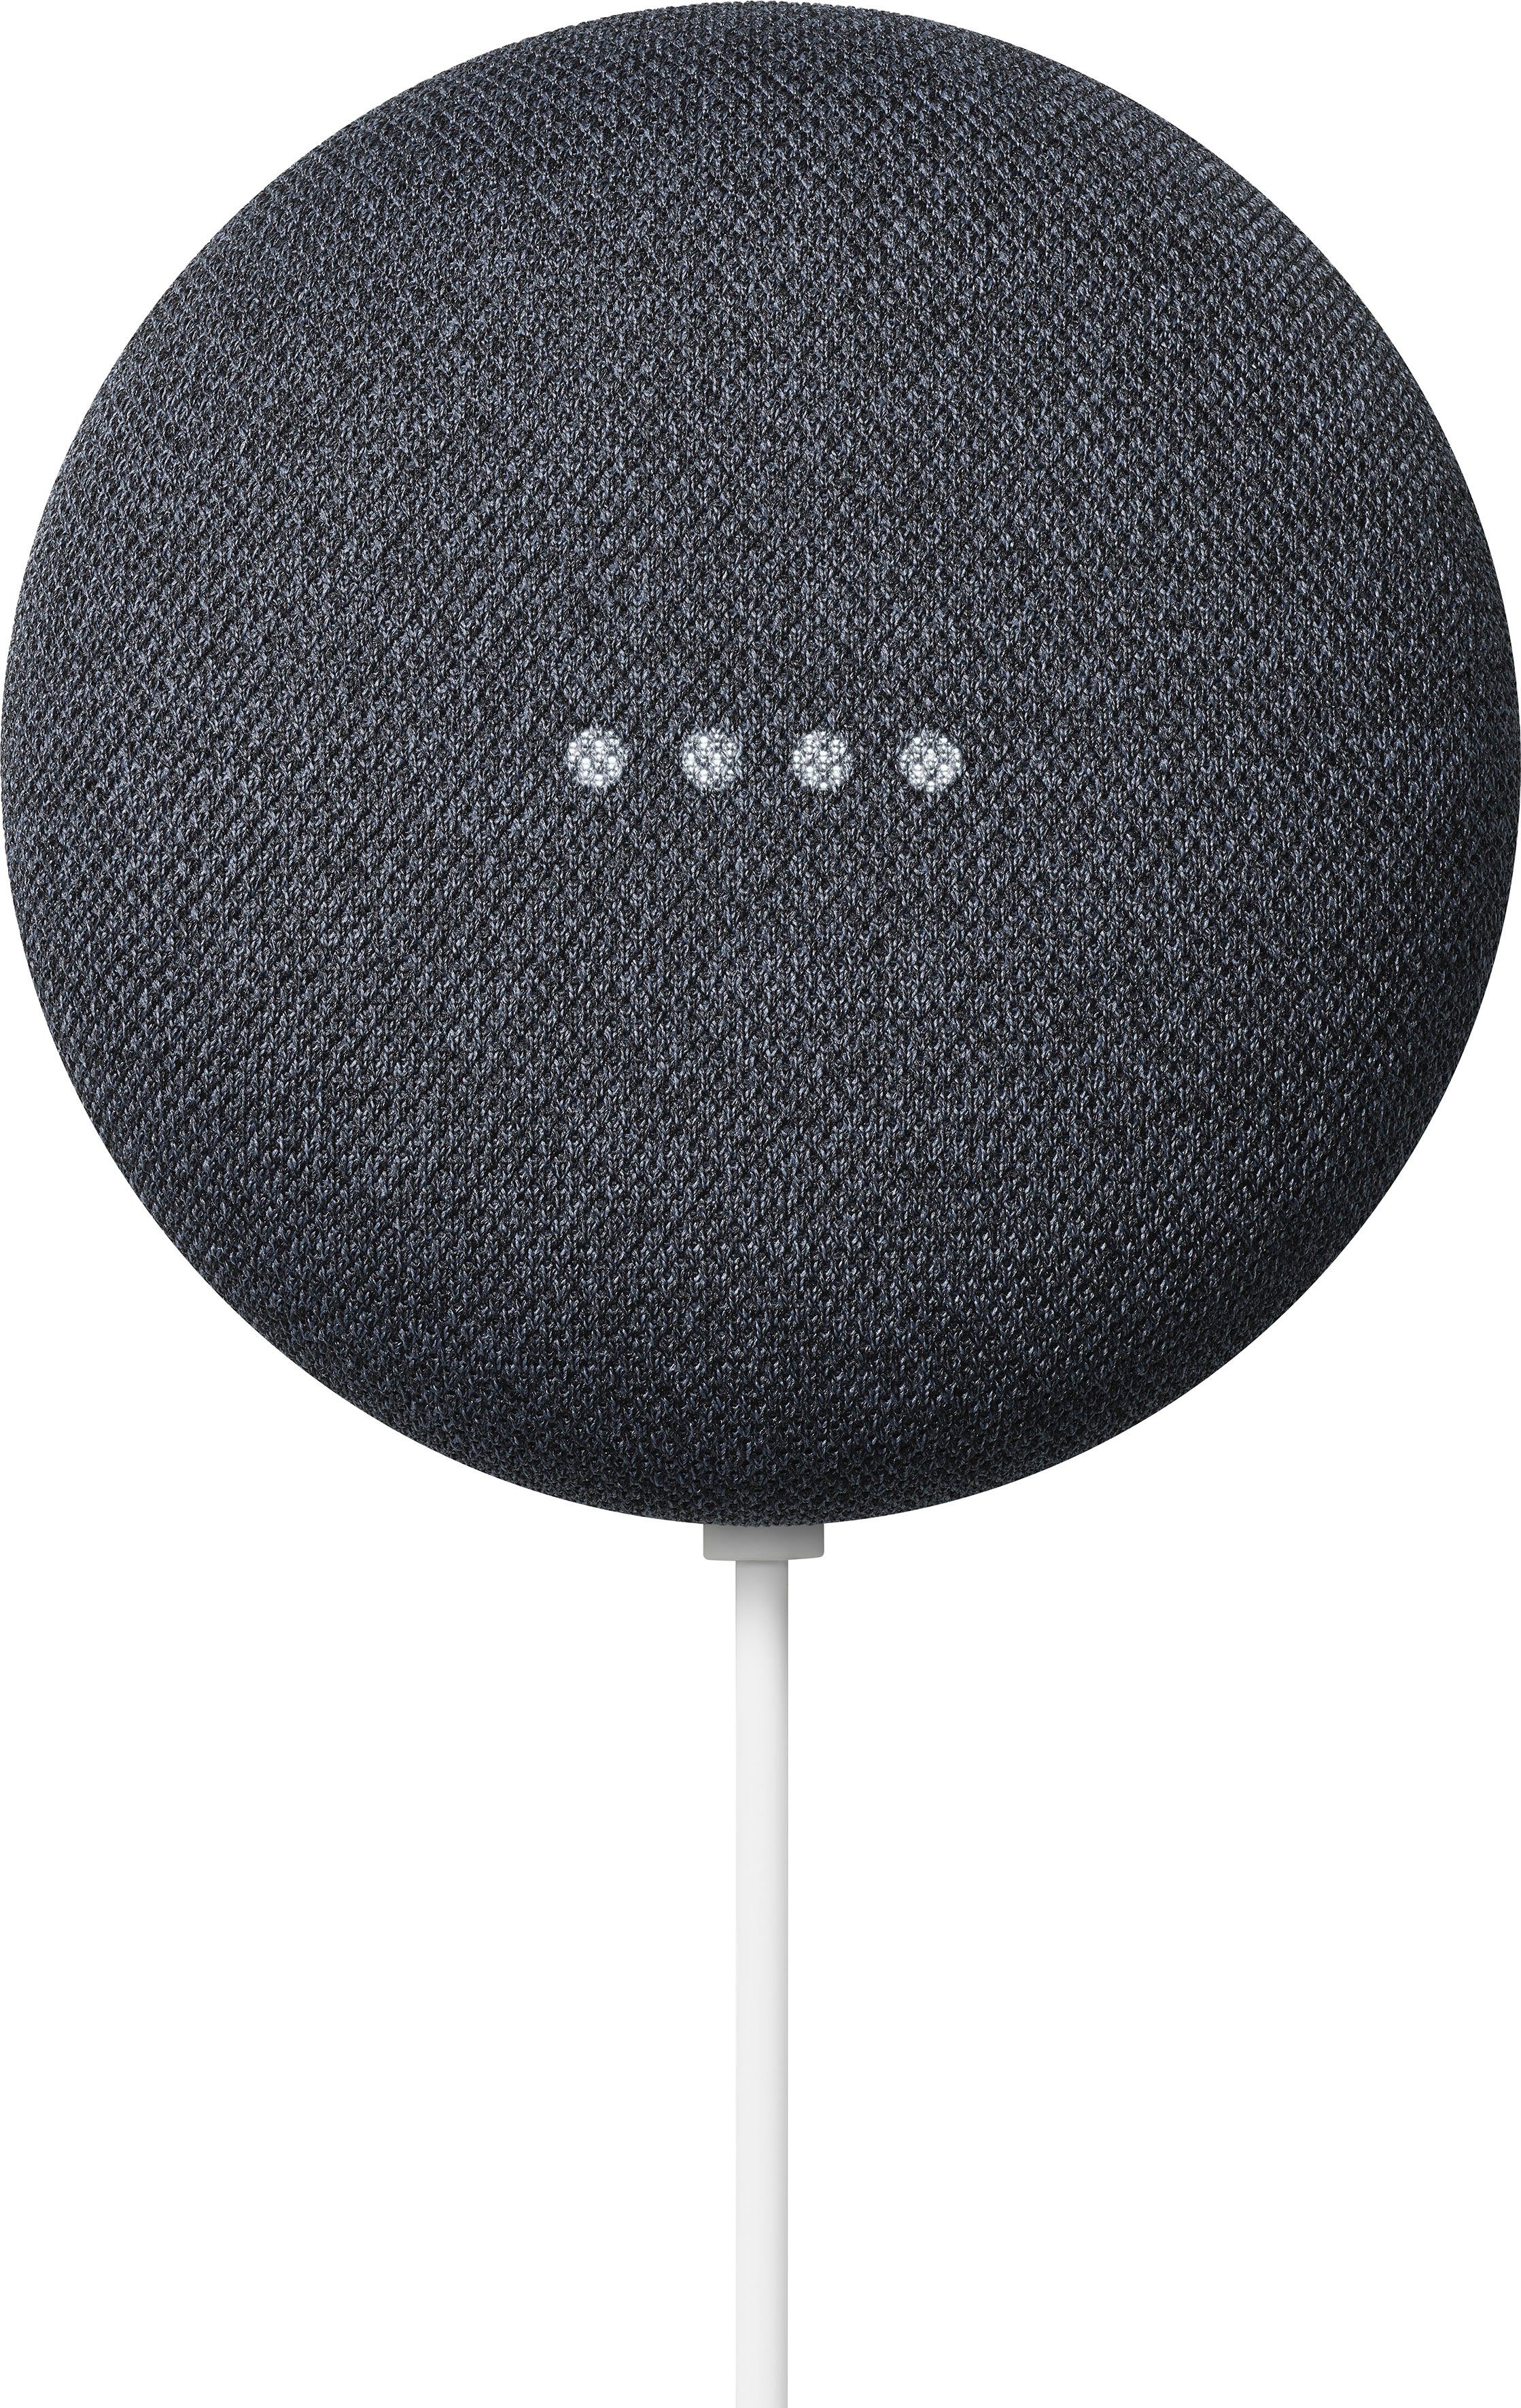 Google Nest Mini (2. Generation) Smart Speaker (Bluetooth, WLAN (WiFi)